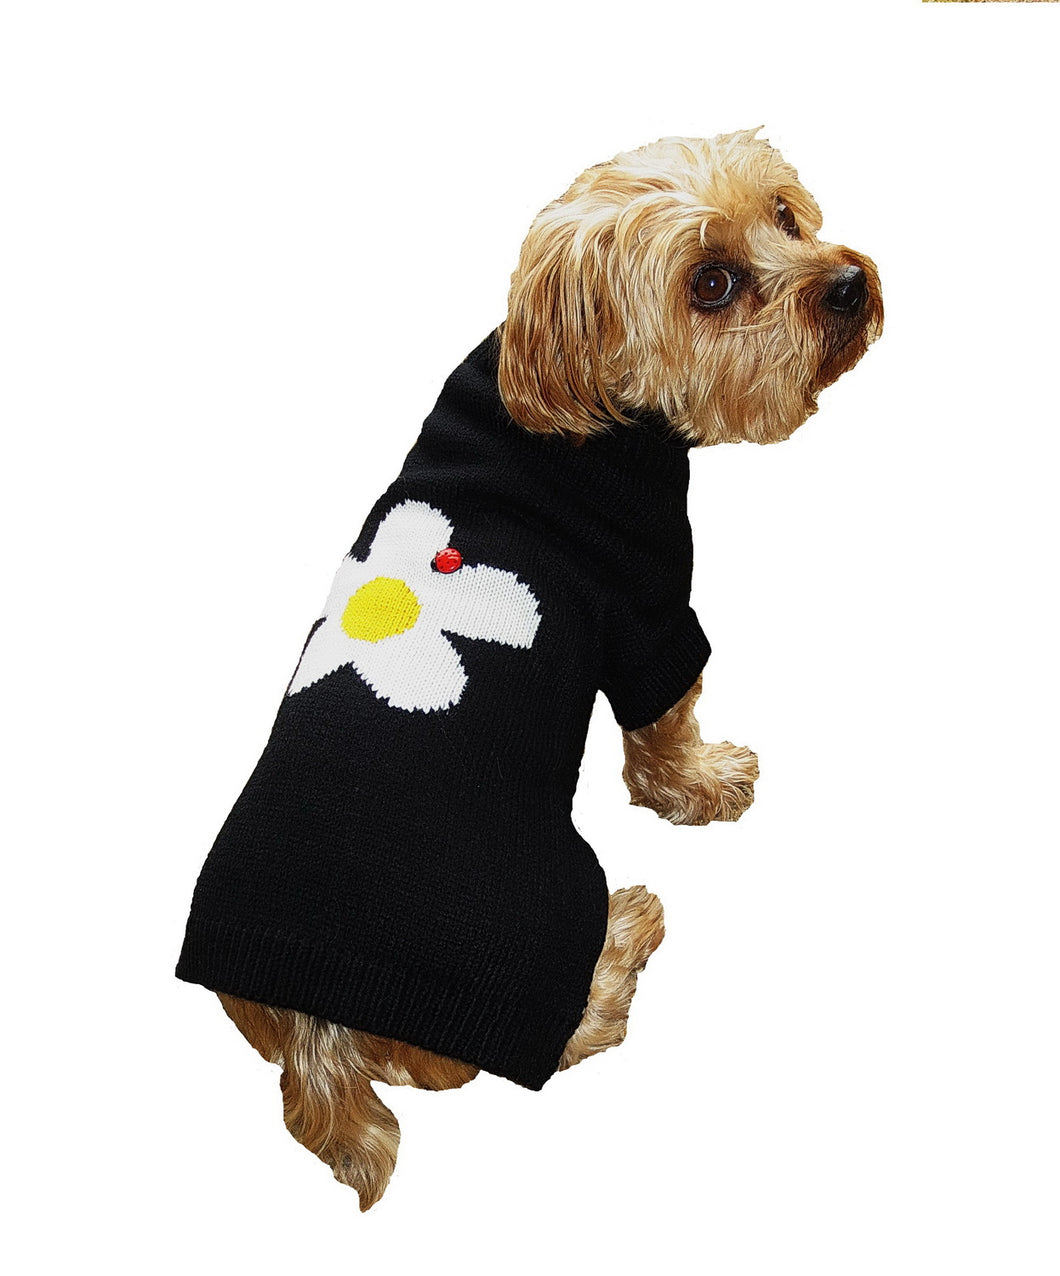 dog-wears-daisy-sweater-with-ladybug